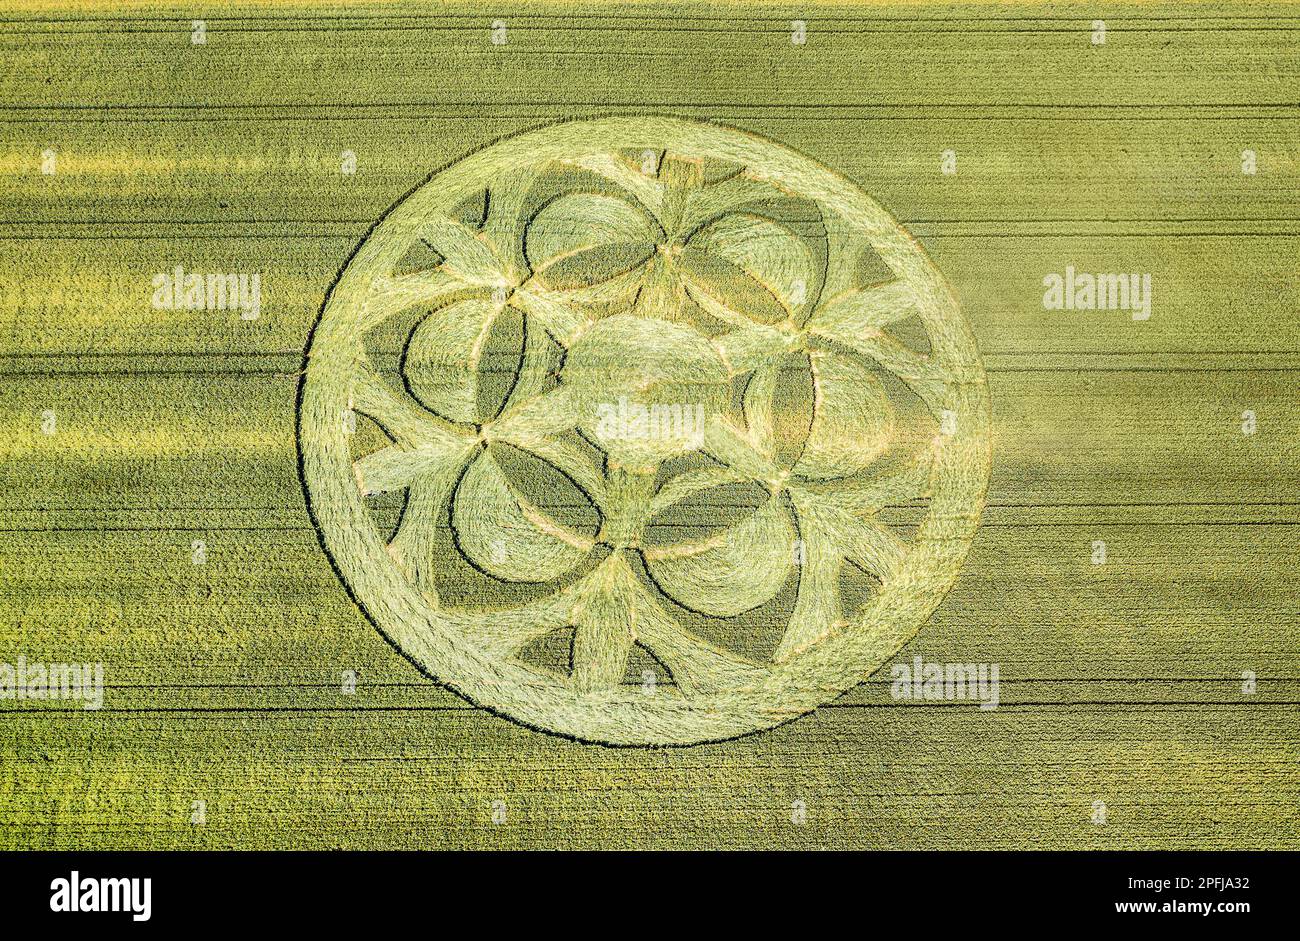 Canton Bern, Switzerland - July 05, 2019: mysterious crop circle emerged overnight in wheat field with beautiful pattern. Stock Photo